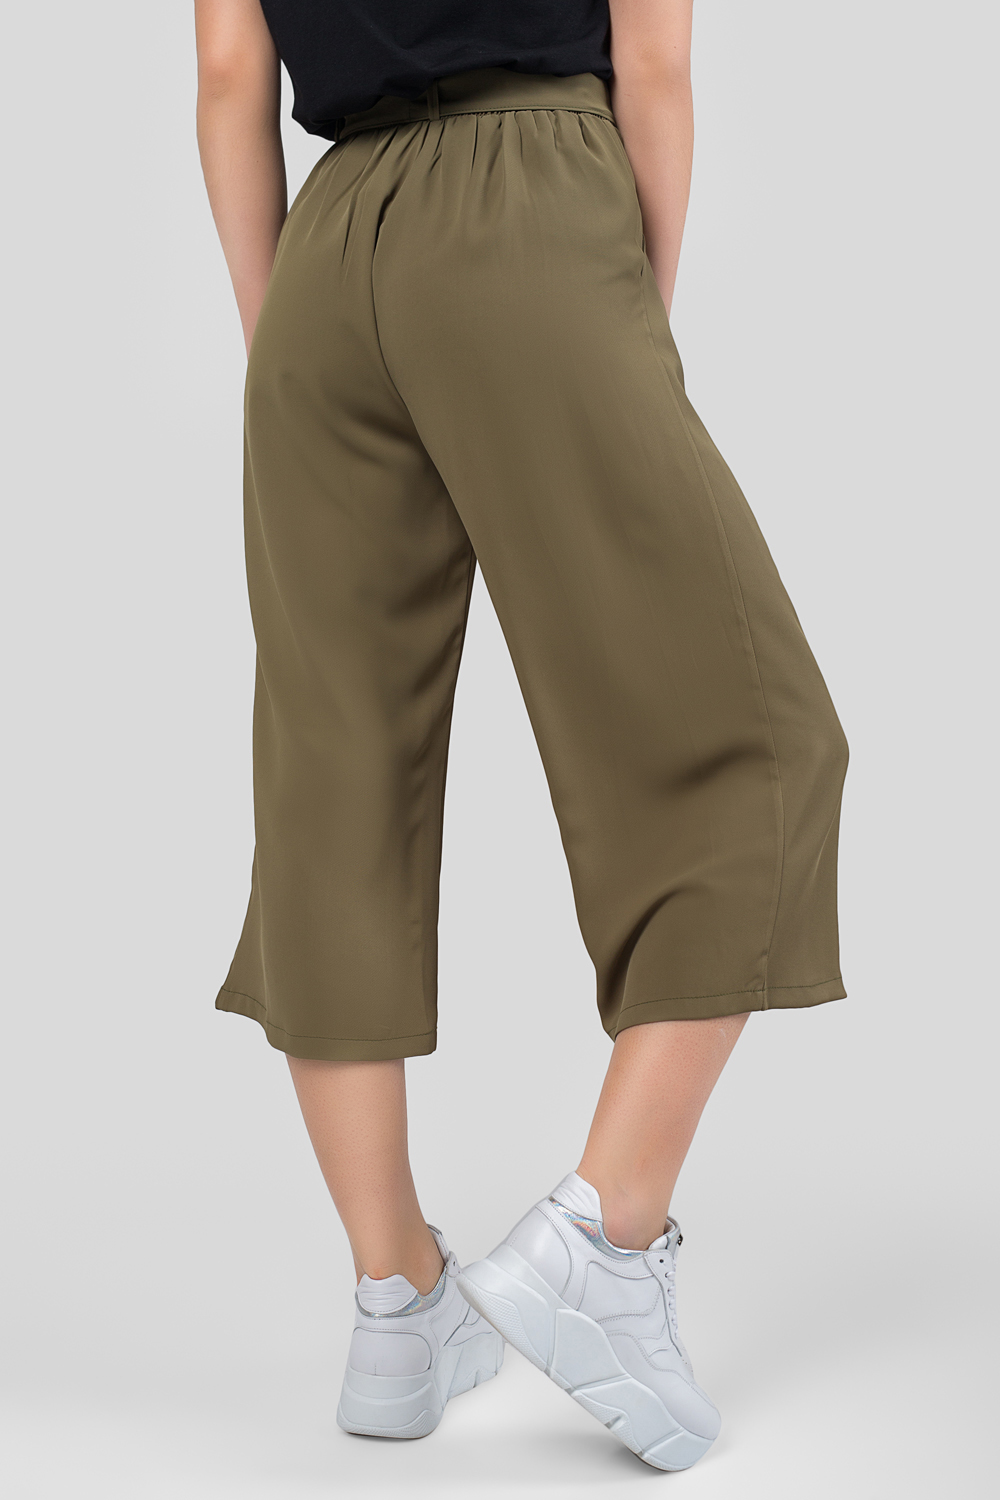 Pants - khaki culottes